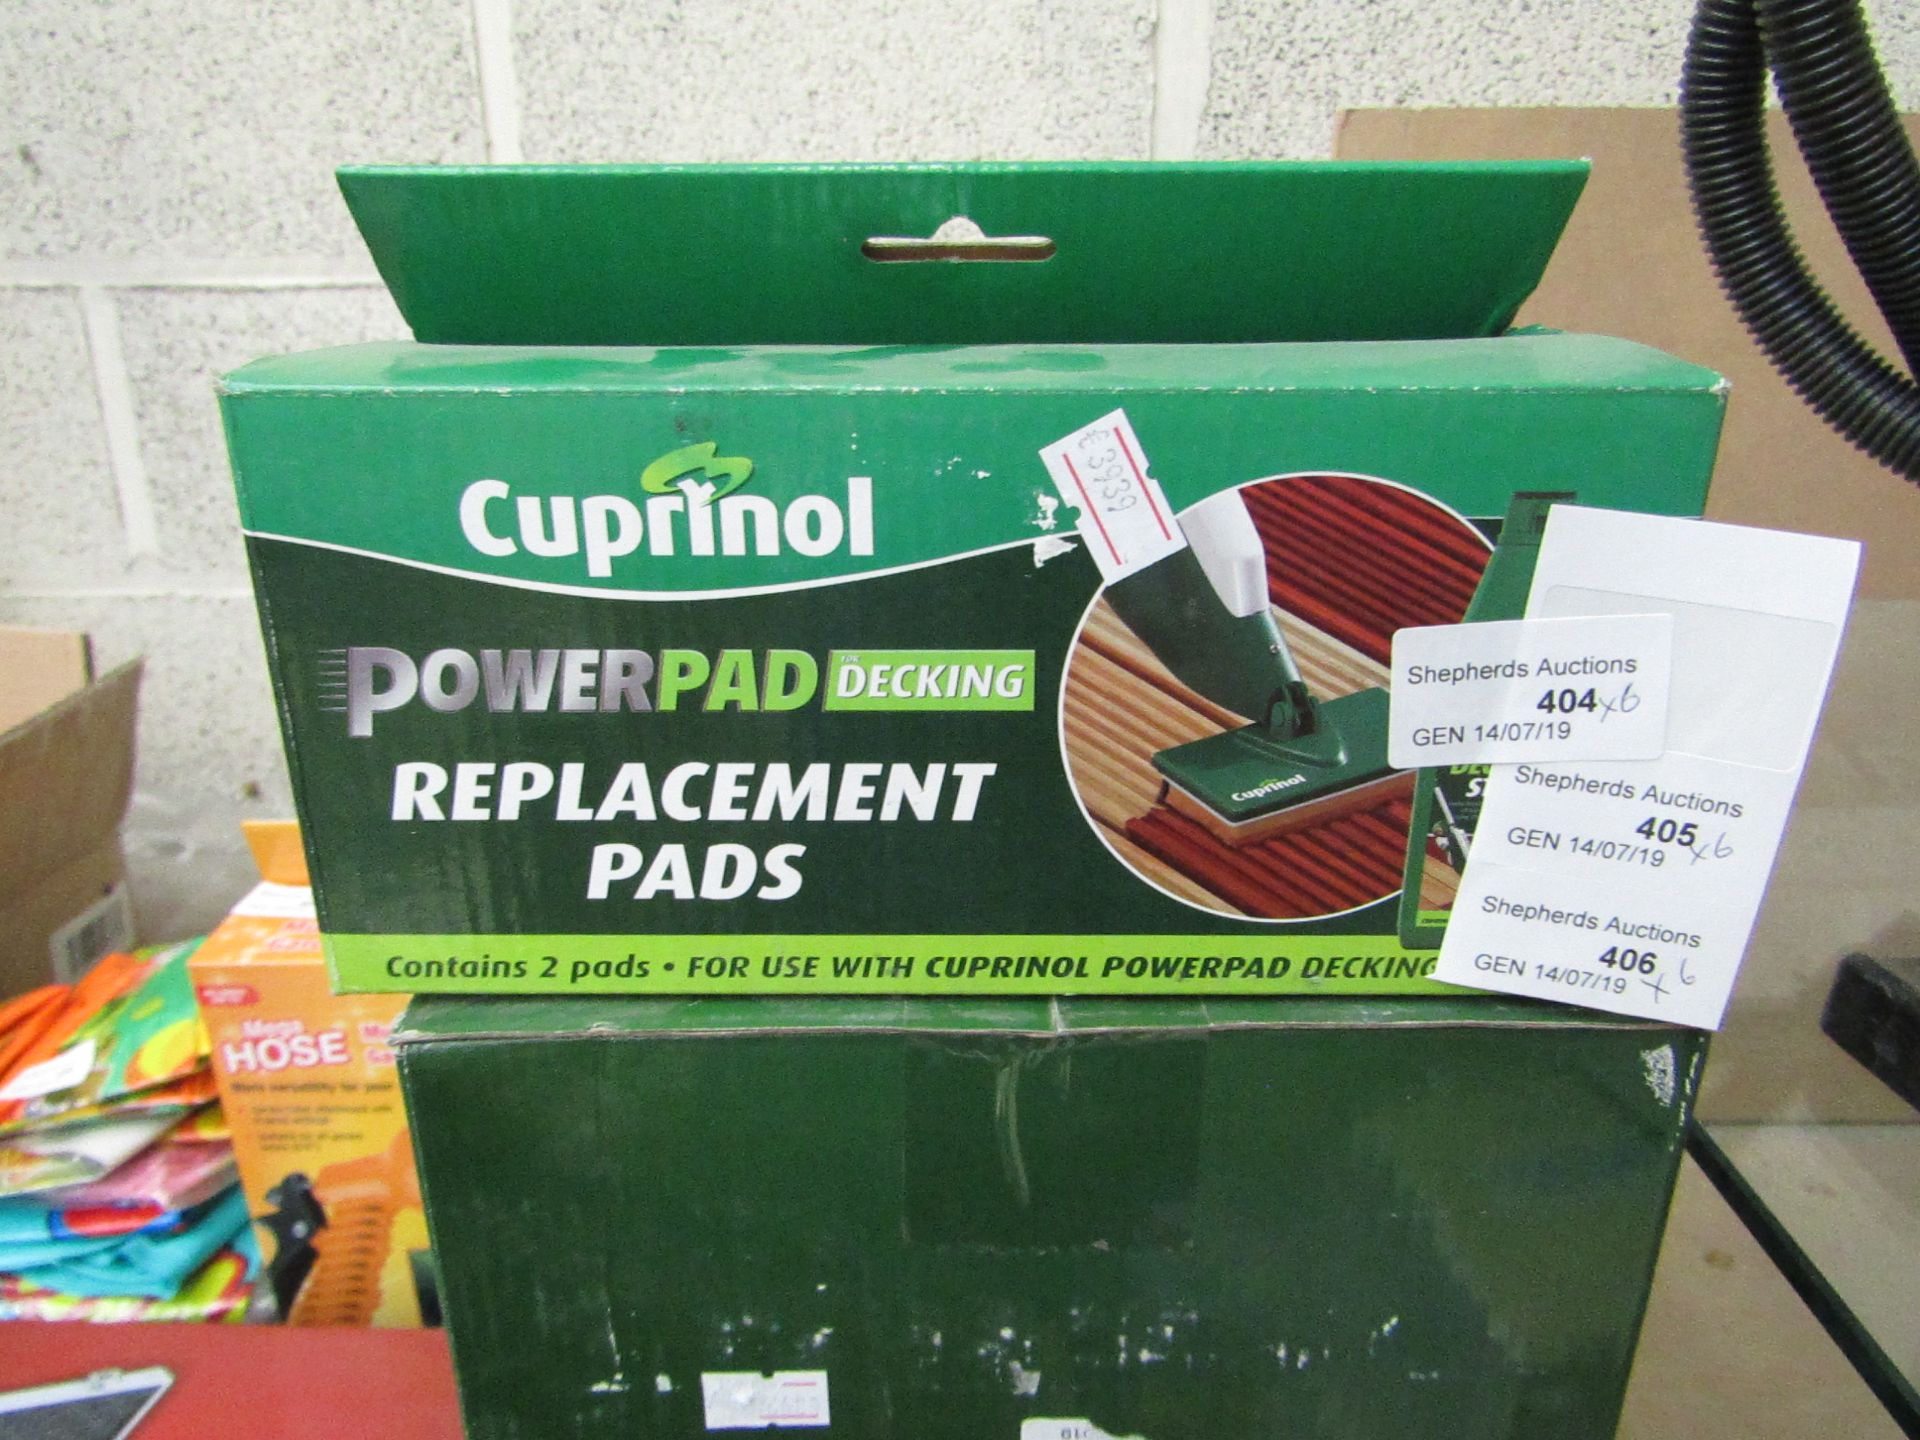 6 x Cuprinol Powerpad Decking replacement pads, boxed